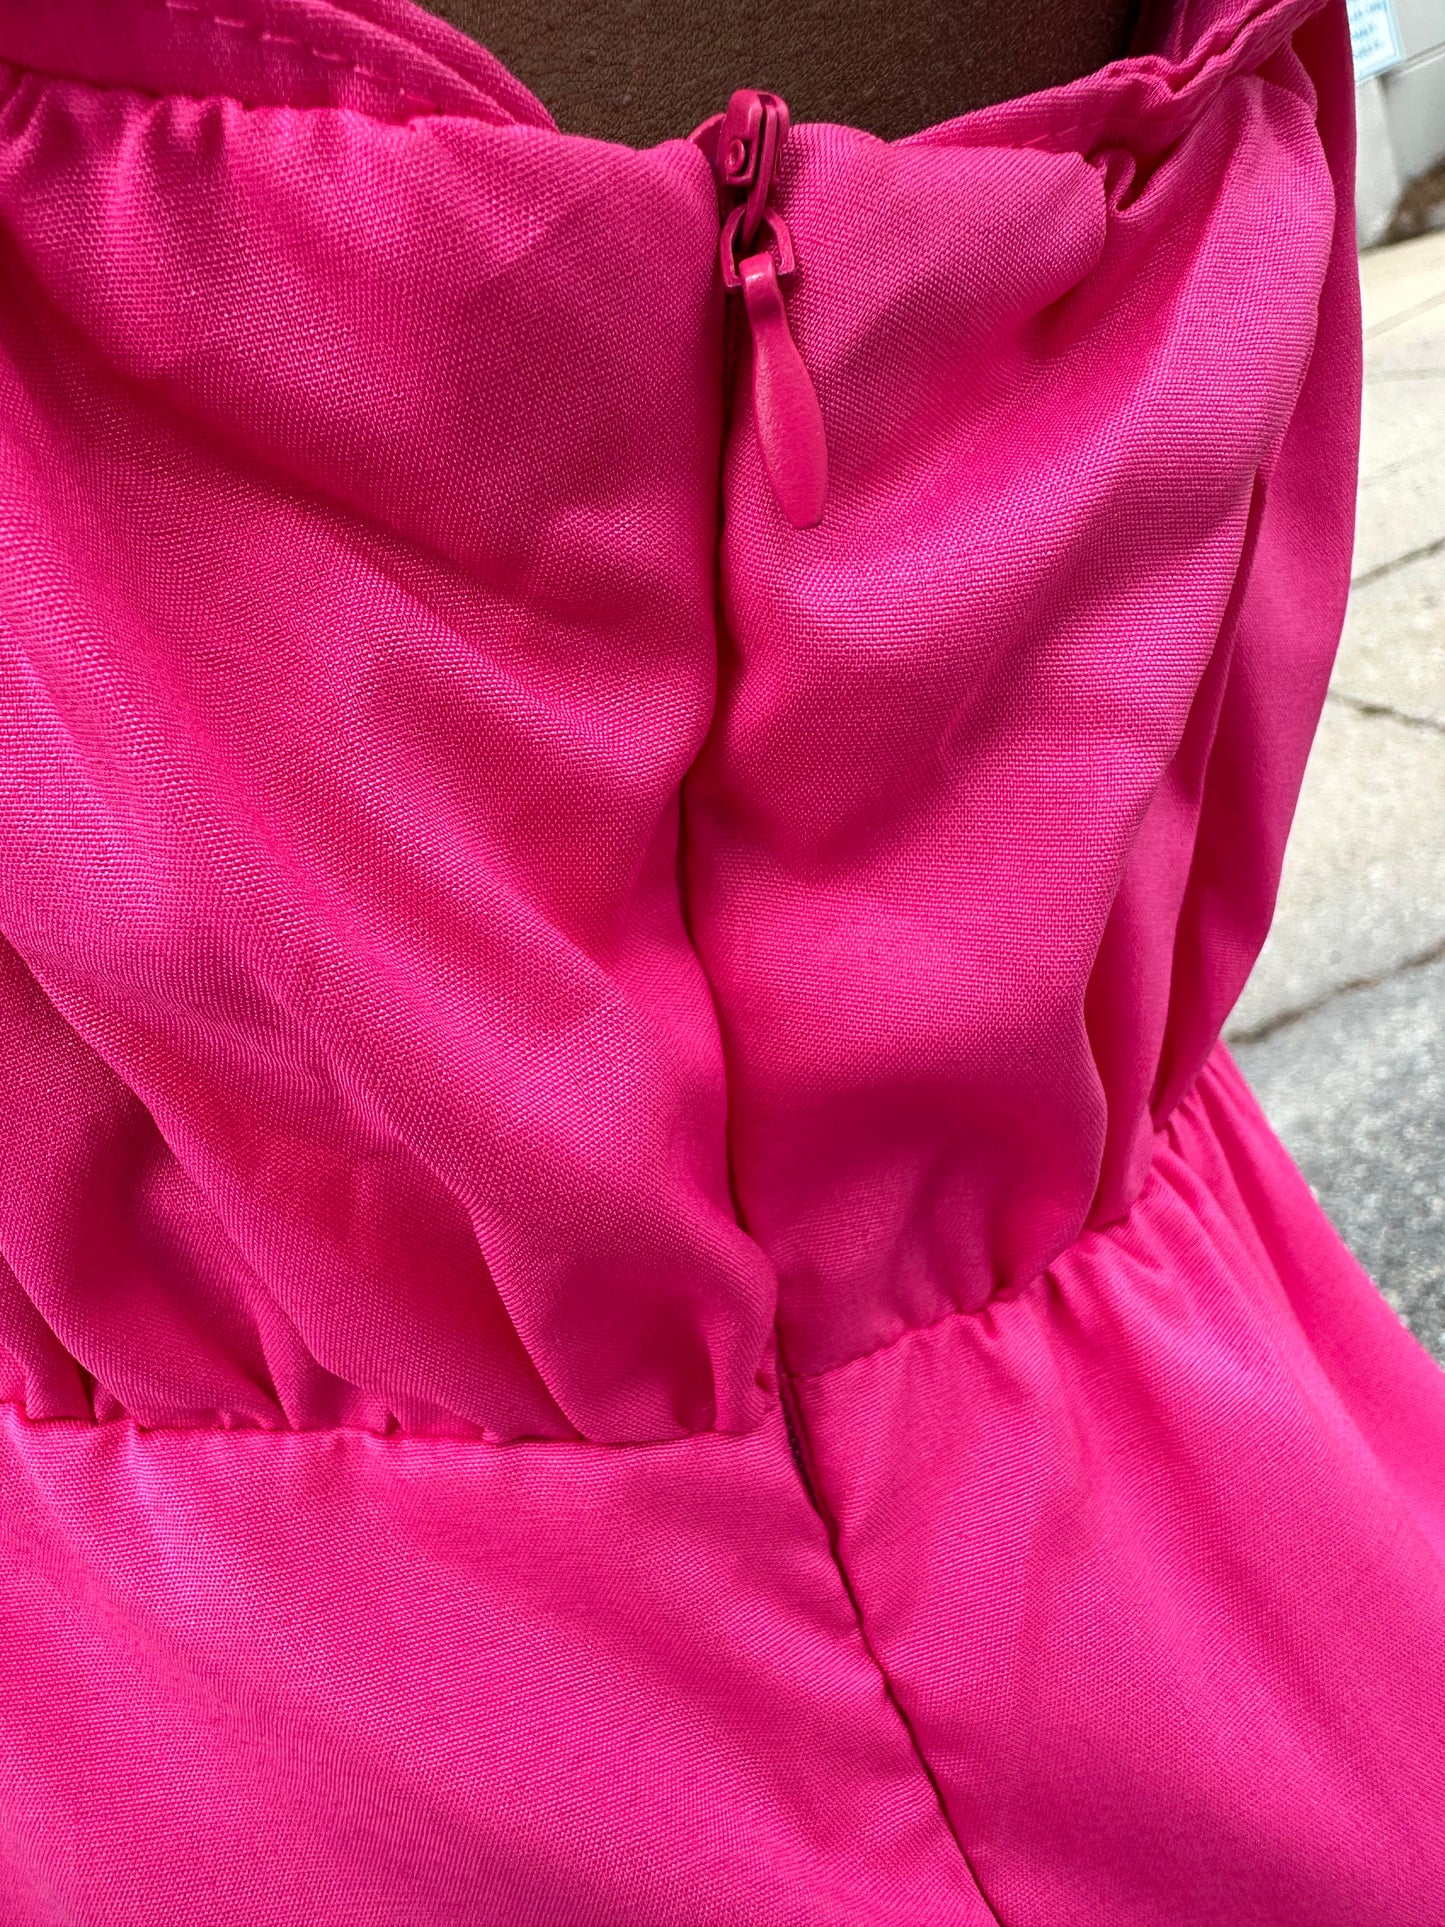 Pink Maxi Dress (XL Available)